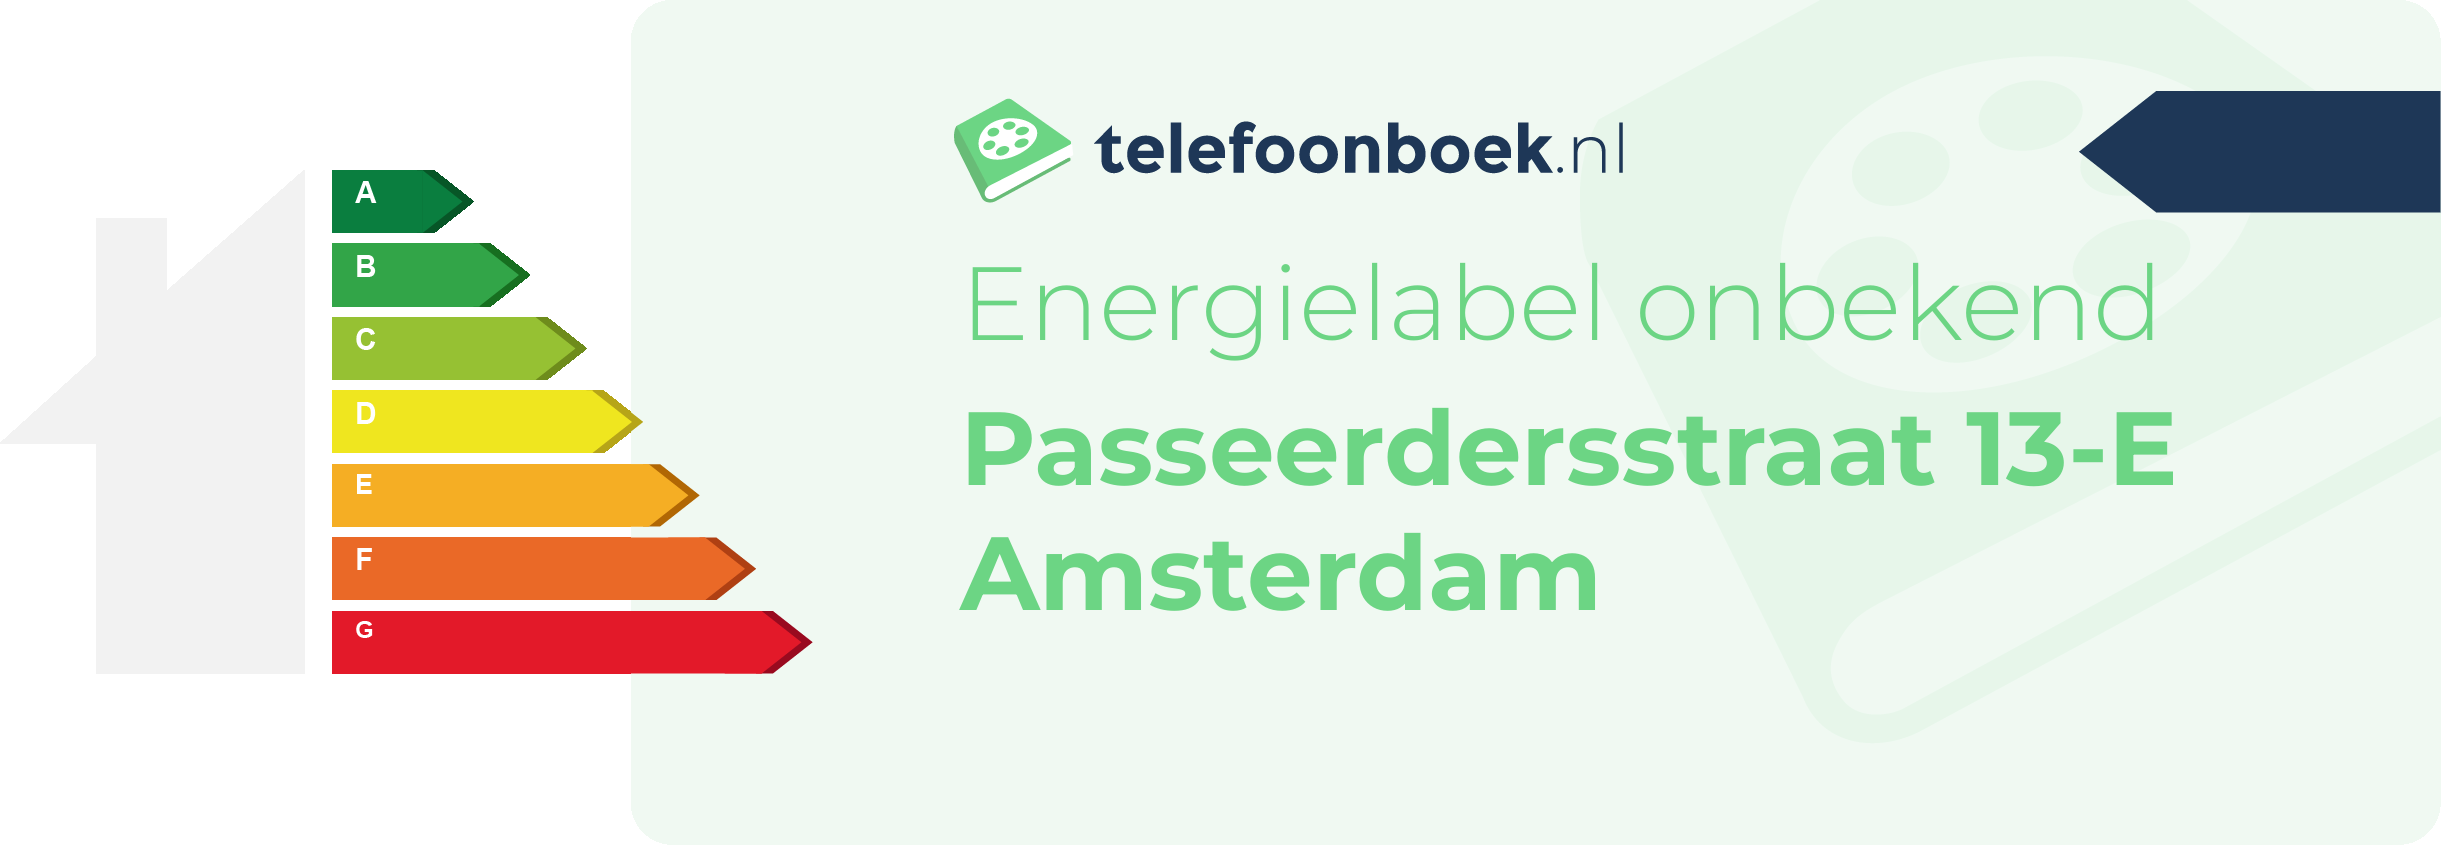 Energielabel Passeerdersstraat 13-E Amsterdam